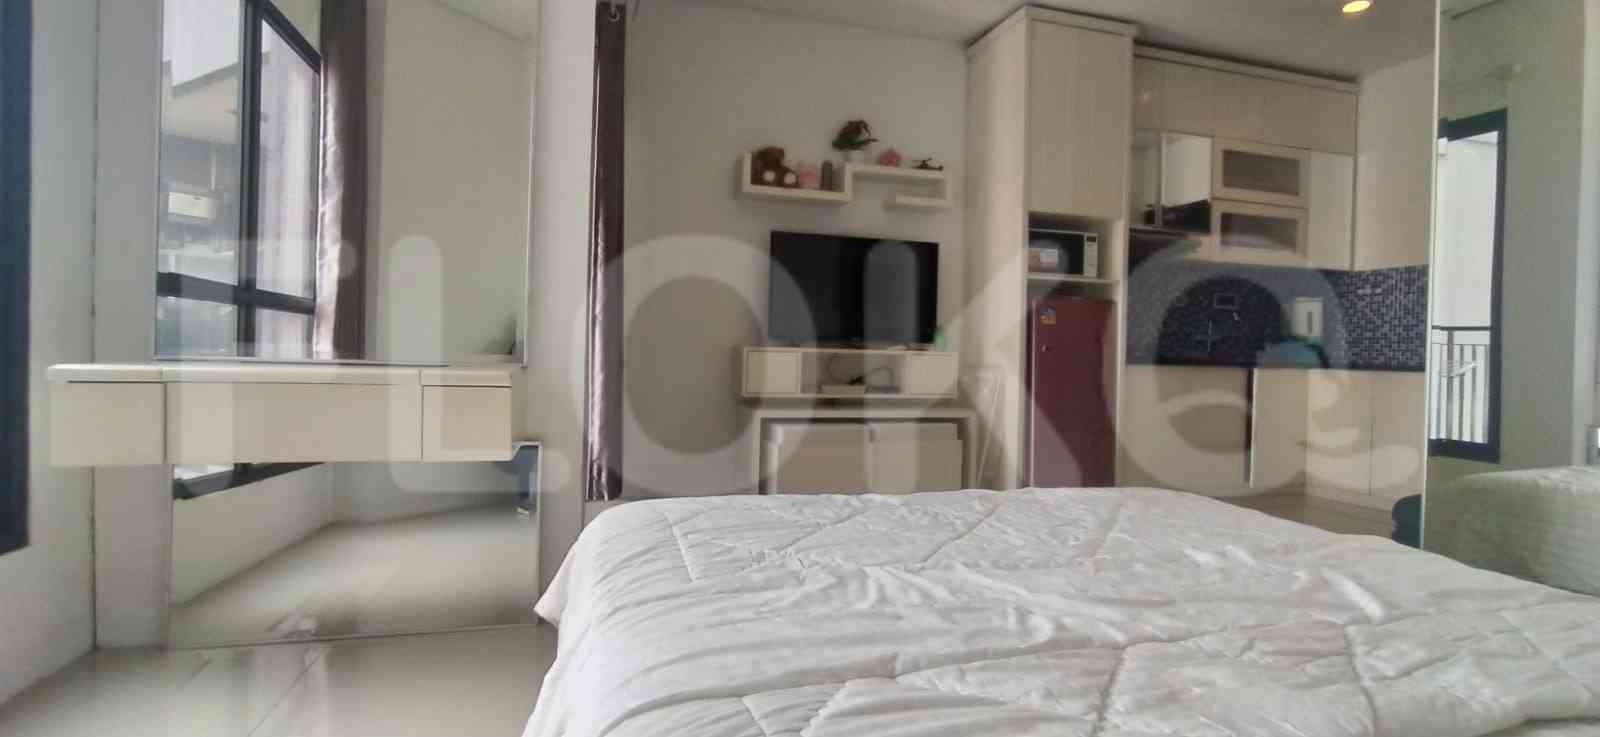 1 Bedroom on 31st Floor for Rent in Tamansari Semanggi Apartment - fsu92d 1